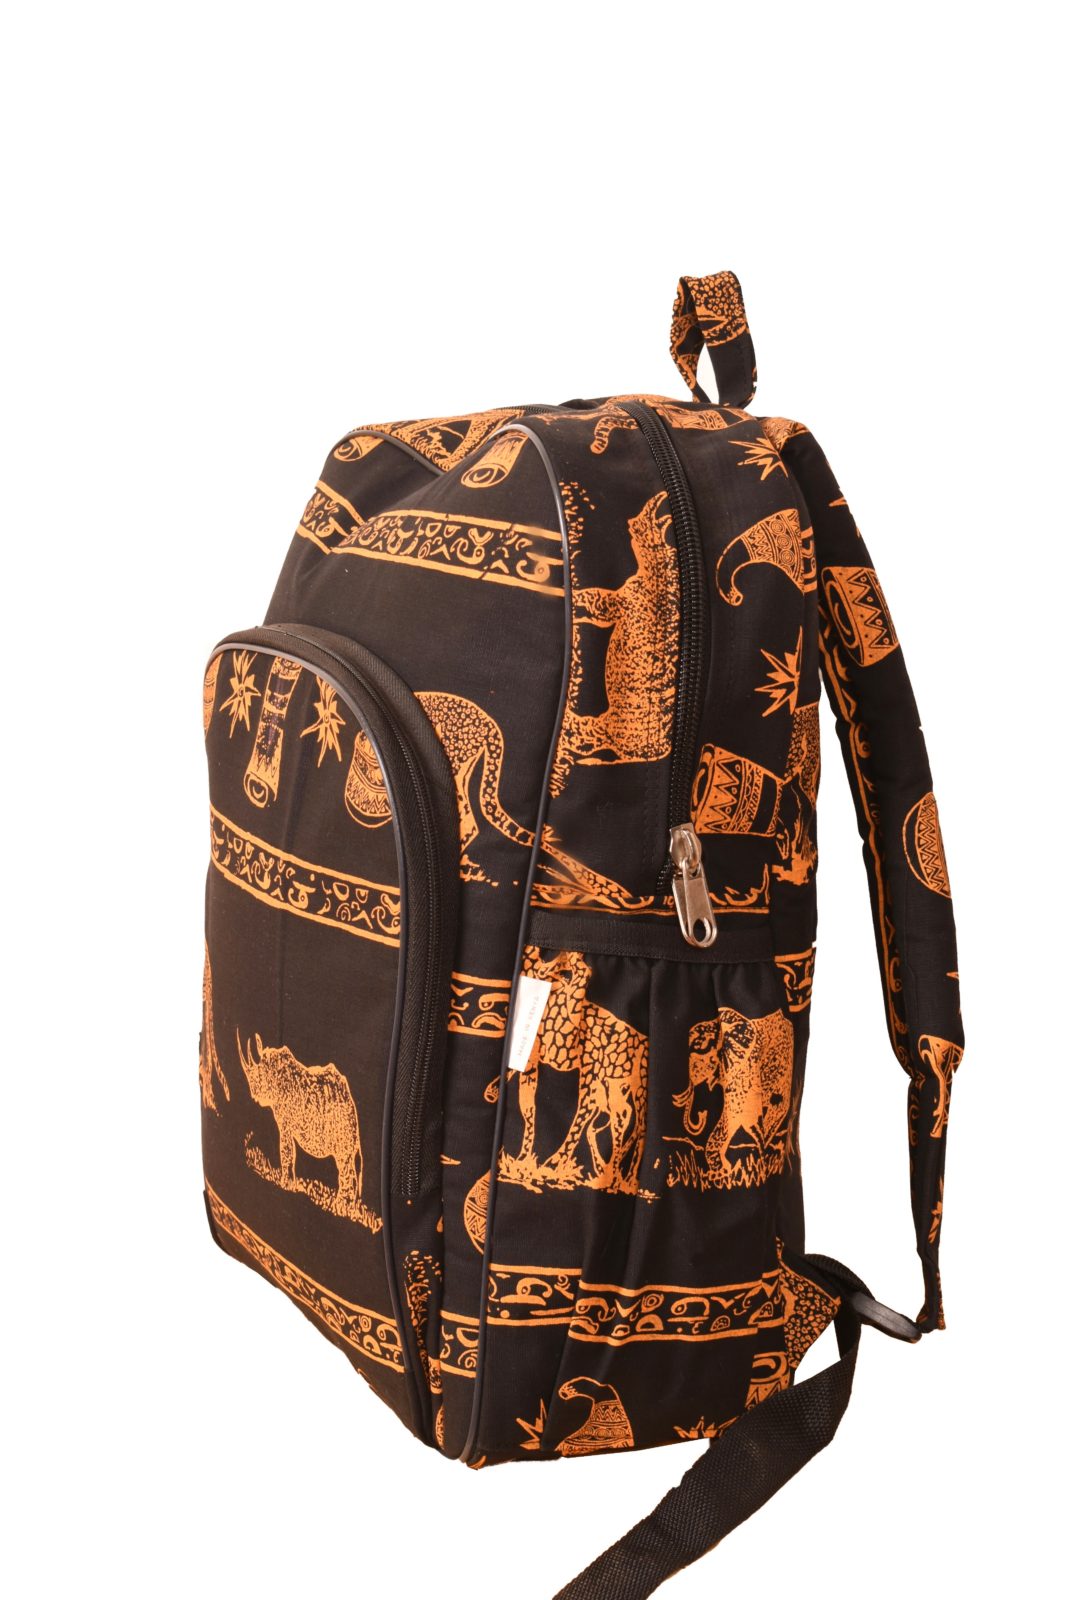 Animal-Print Backpack Bag - best african designs - African Bravo Creative